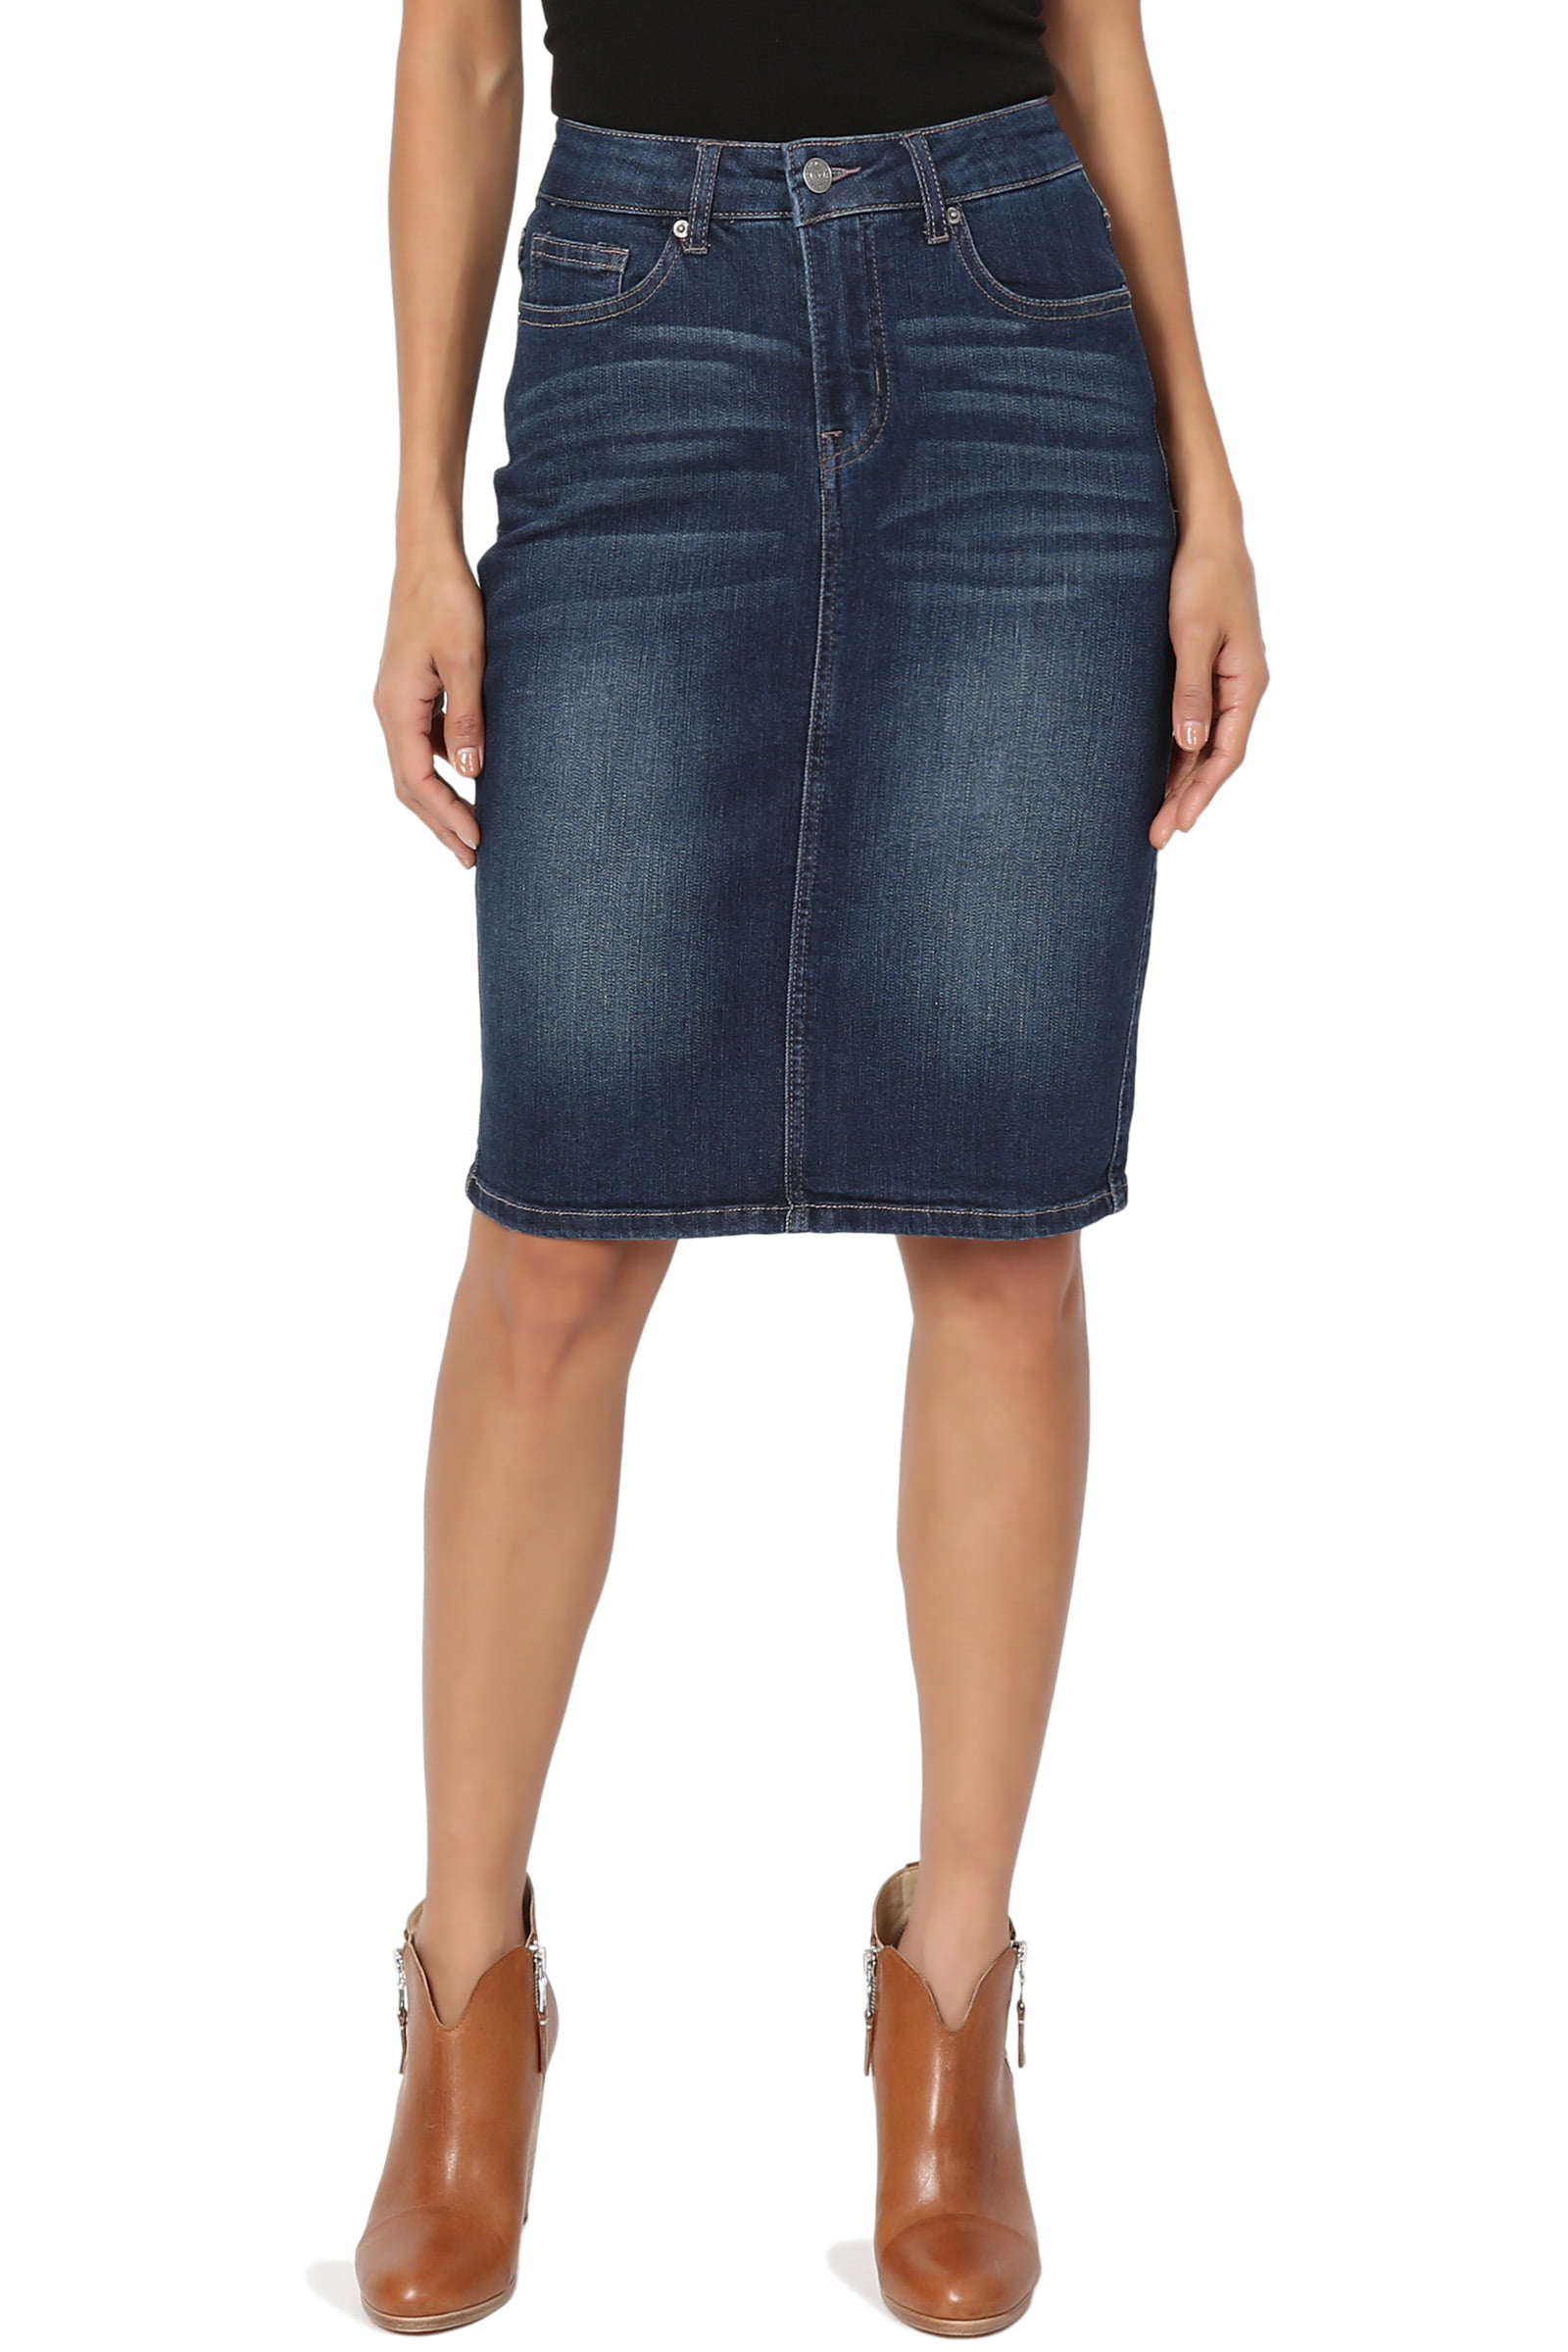 blue jeans skirts knee length